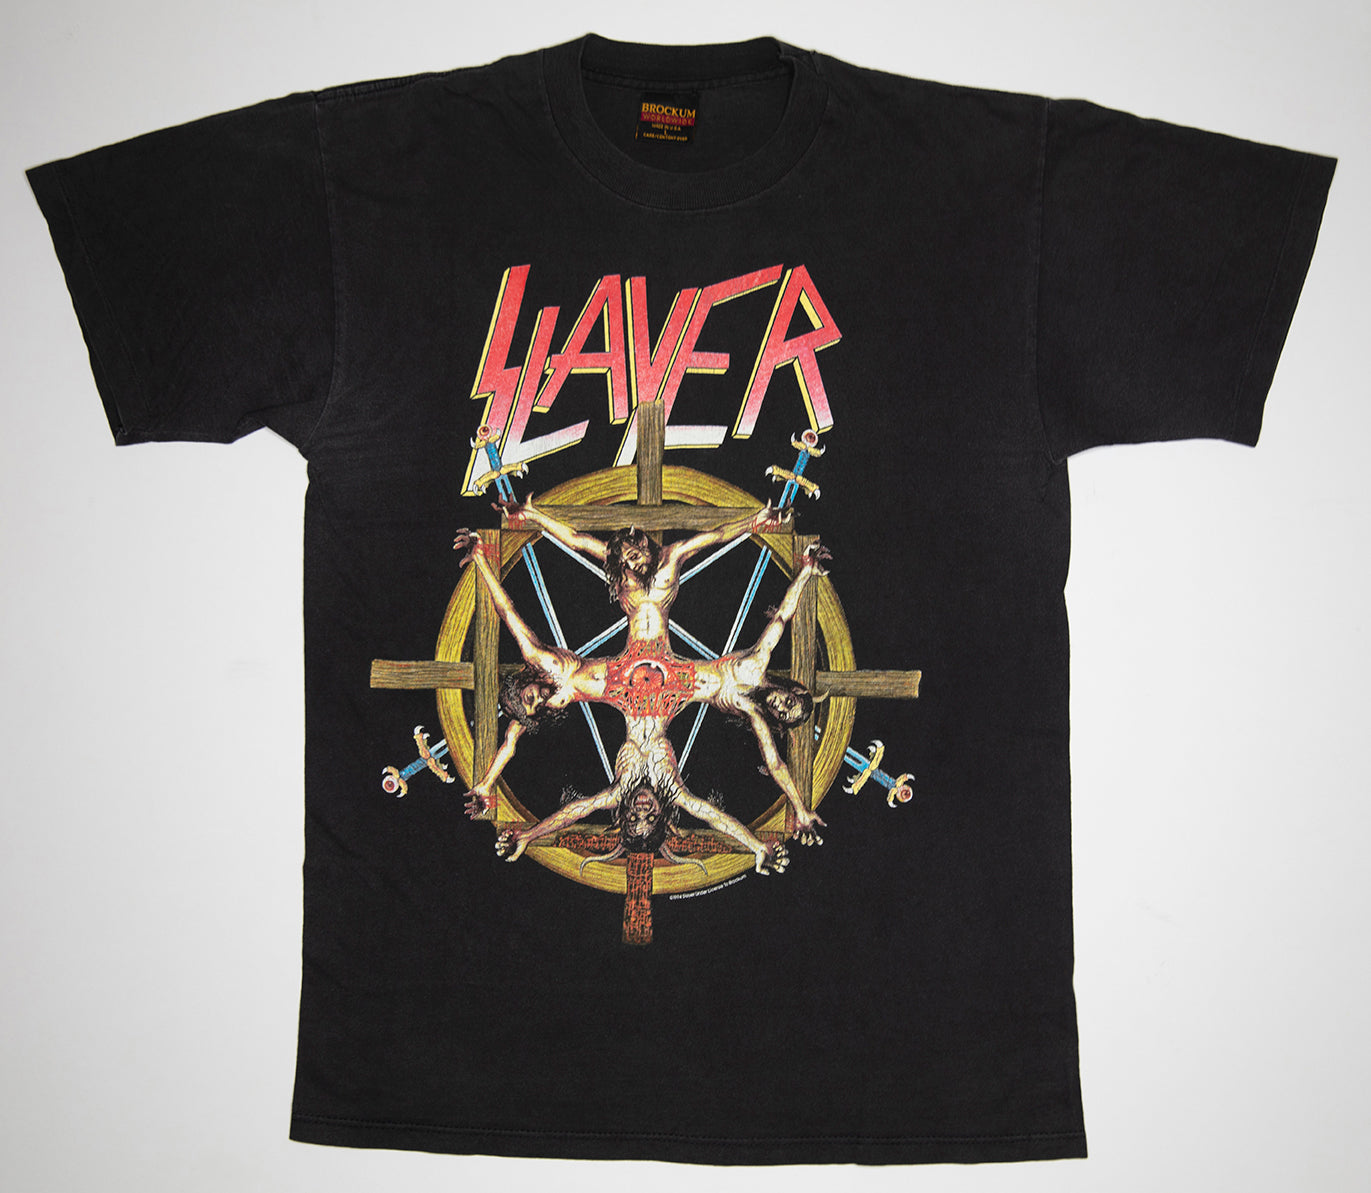 Slayer - Divine Intervention / Circle Of Beliefs World 1994 Tour Shirt Size Large